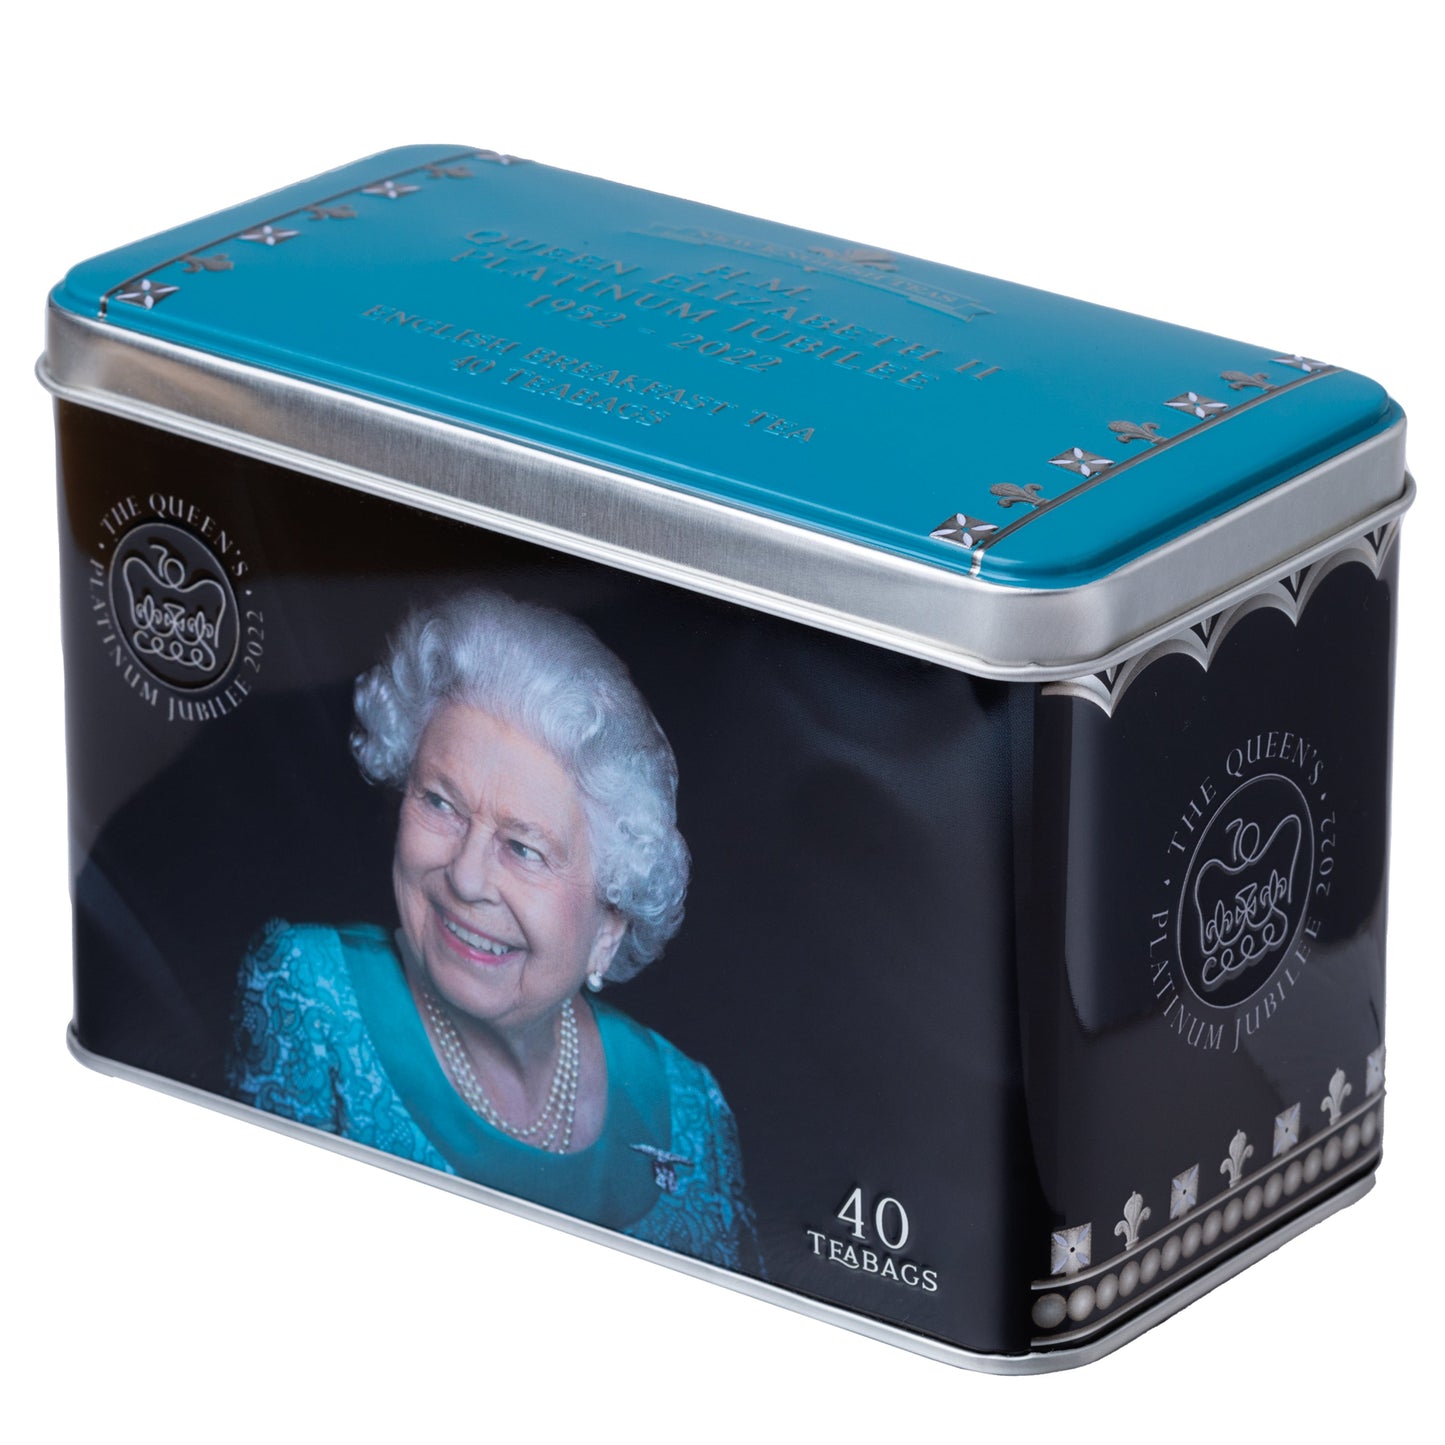 Queen Elizabeth II Platinum Jubilee 2022 Tea Tin with 40 English Breakfast Teabags Black Tea New English Teas 